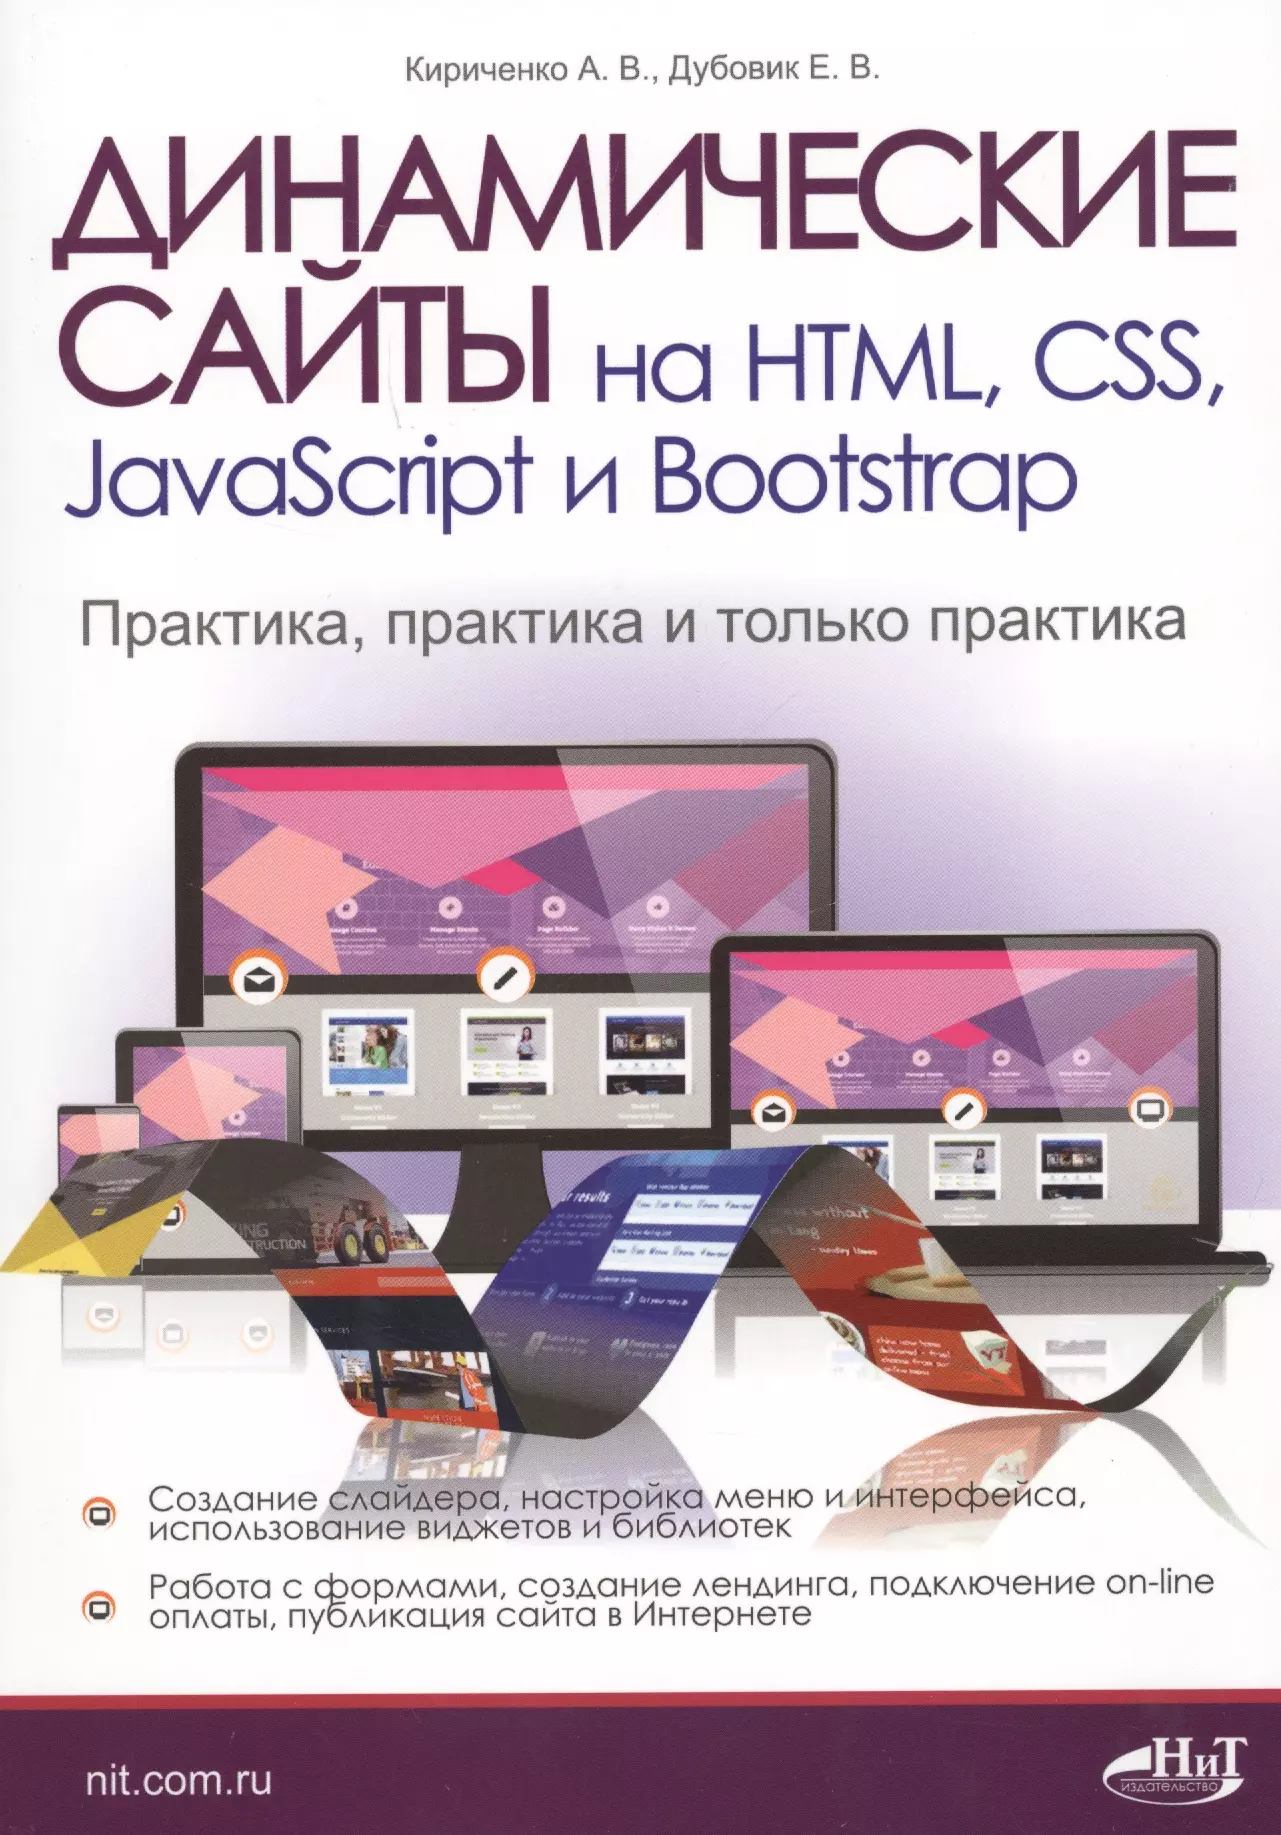    HTML, CSS, JavaScript  Bootstrap. ,    